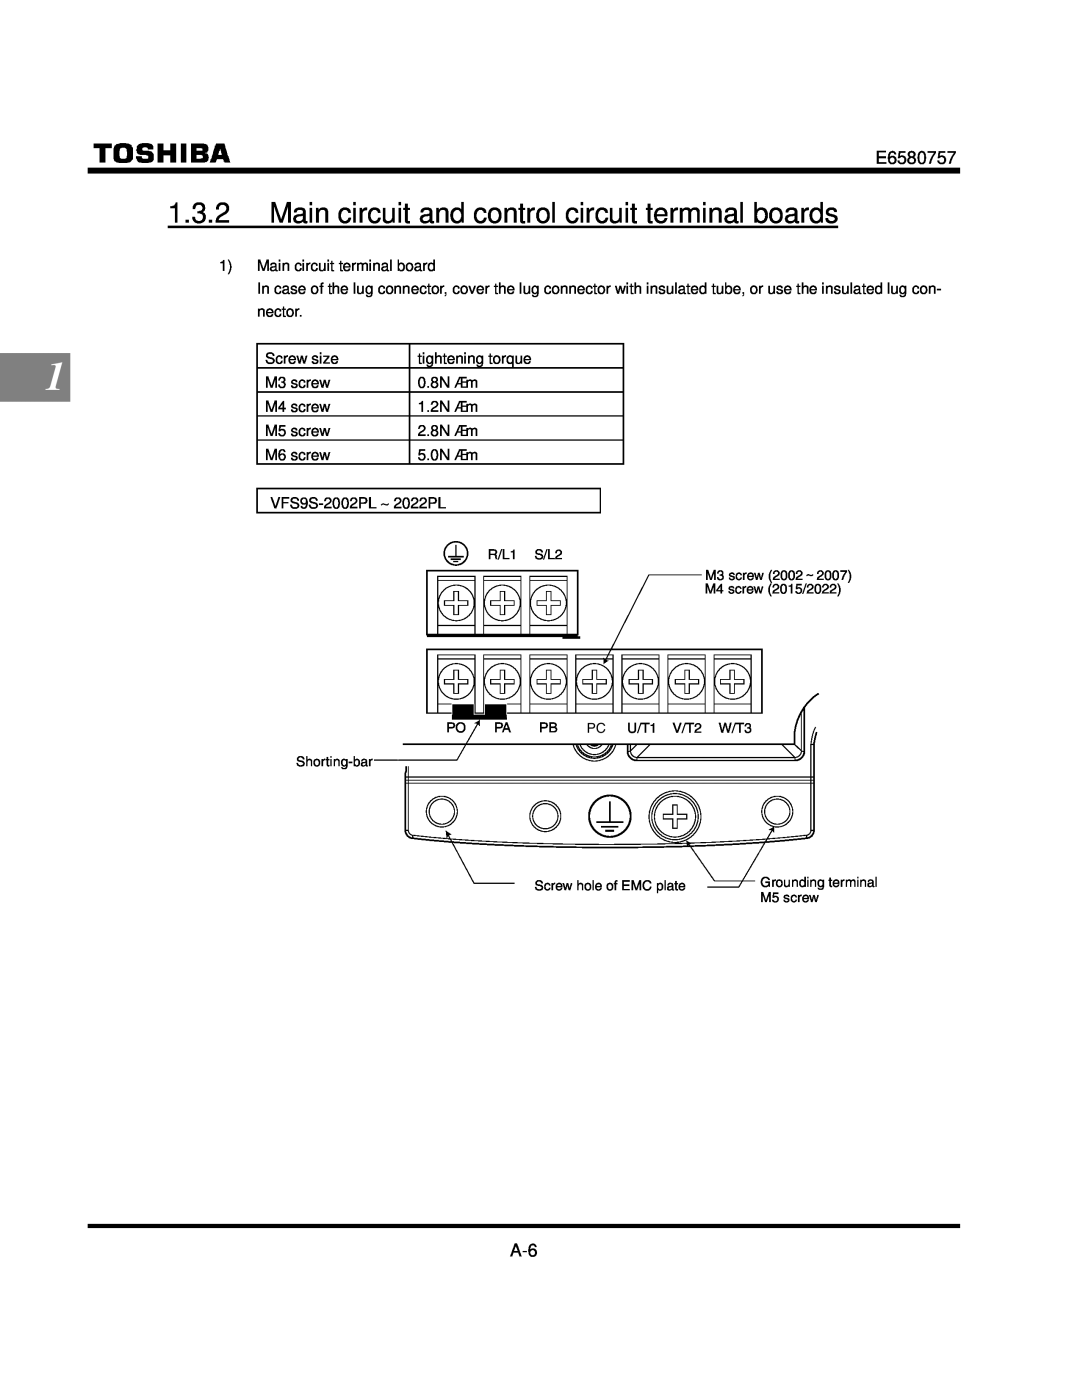 Toshiba VF-S9 manual Main circuit and control circuit terminal boards 